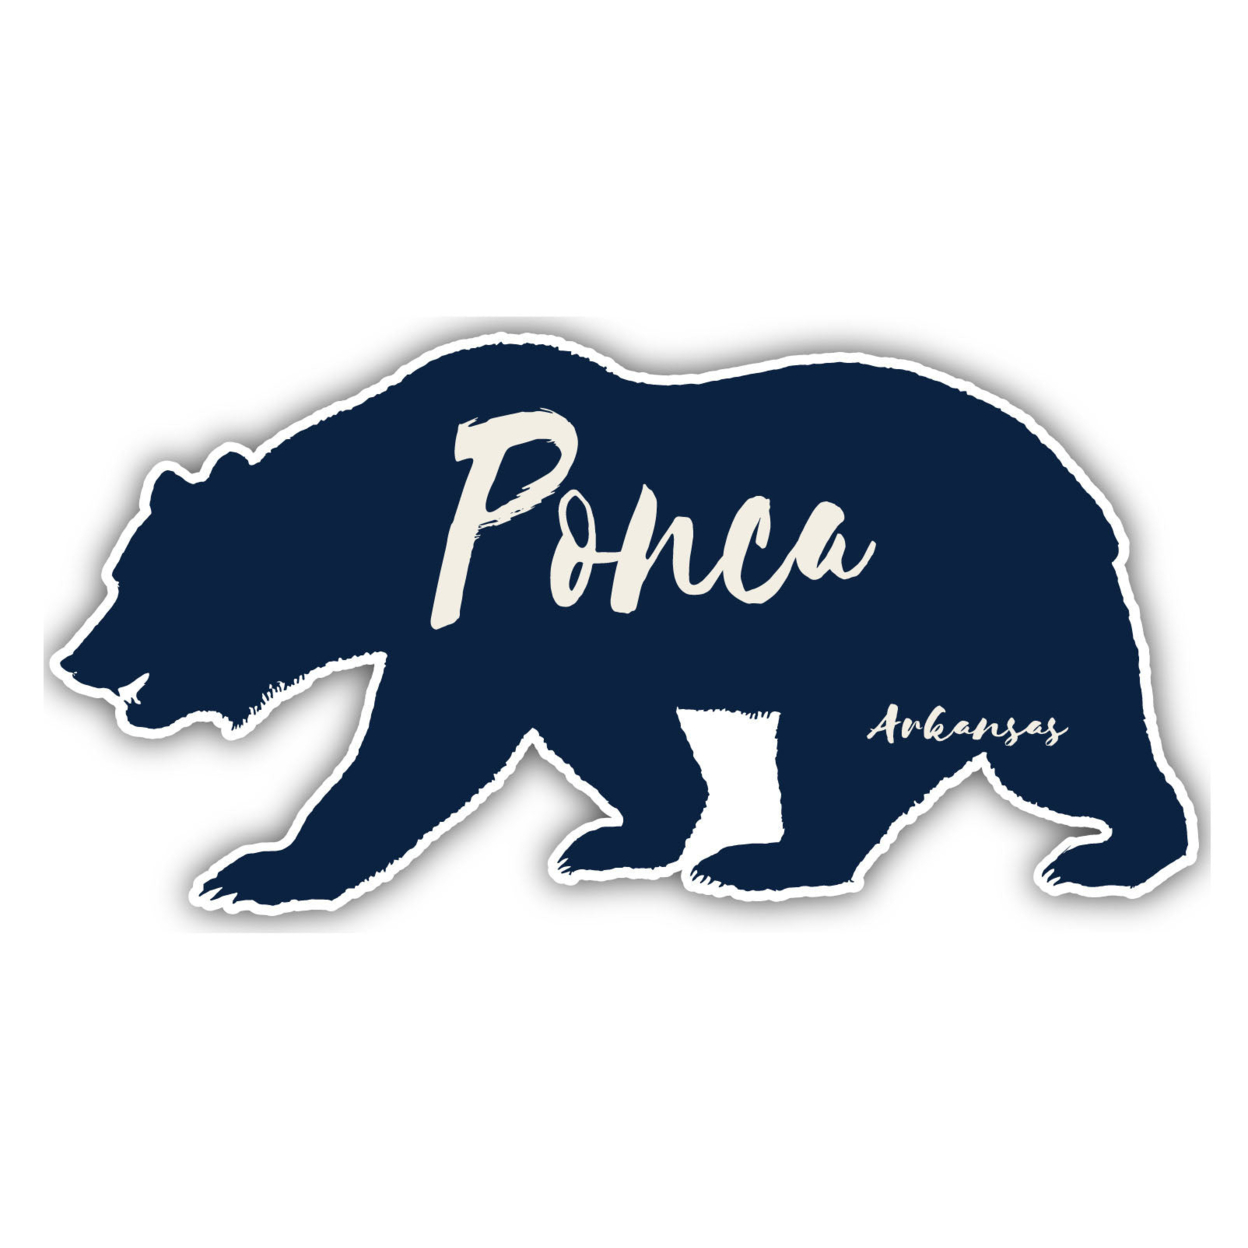 Ponca Arkansas Souvenir Decorative Stickers (Choose Theme And Size) - Single Unit, 4-Inch, Bear